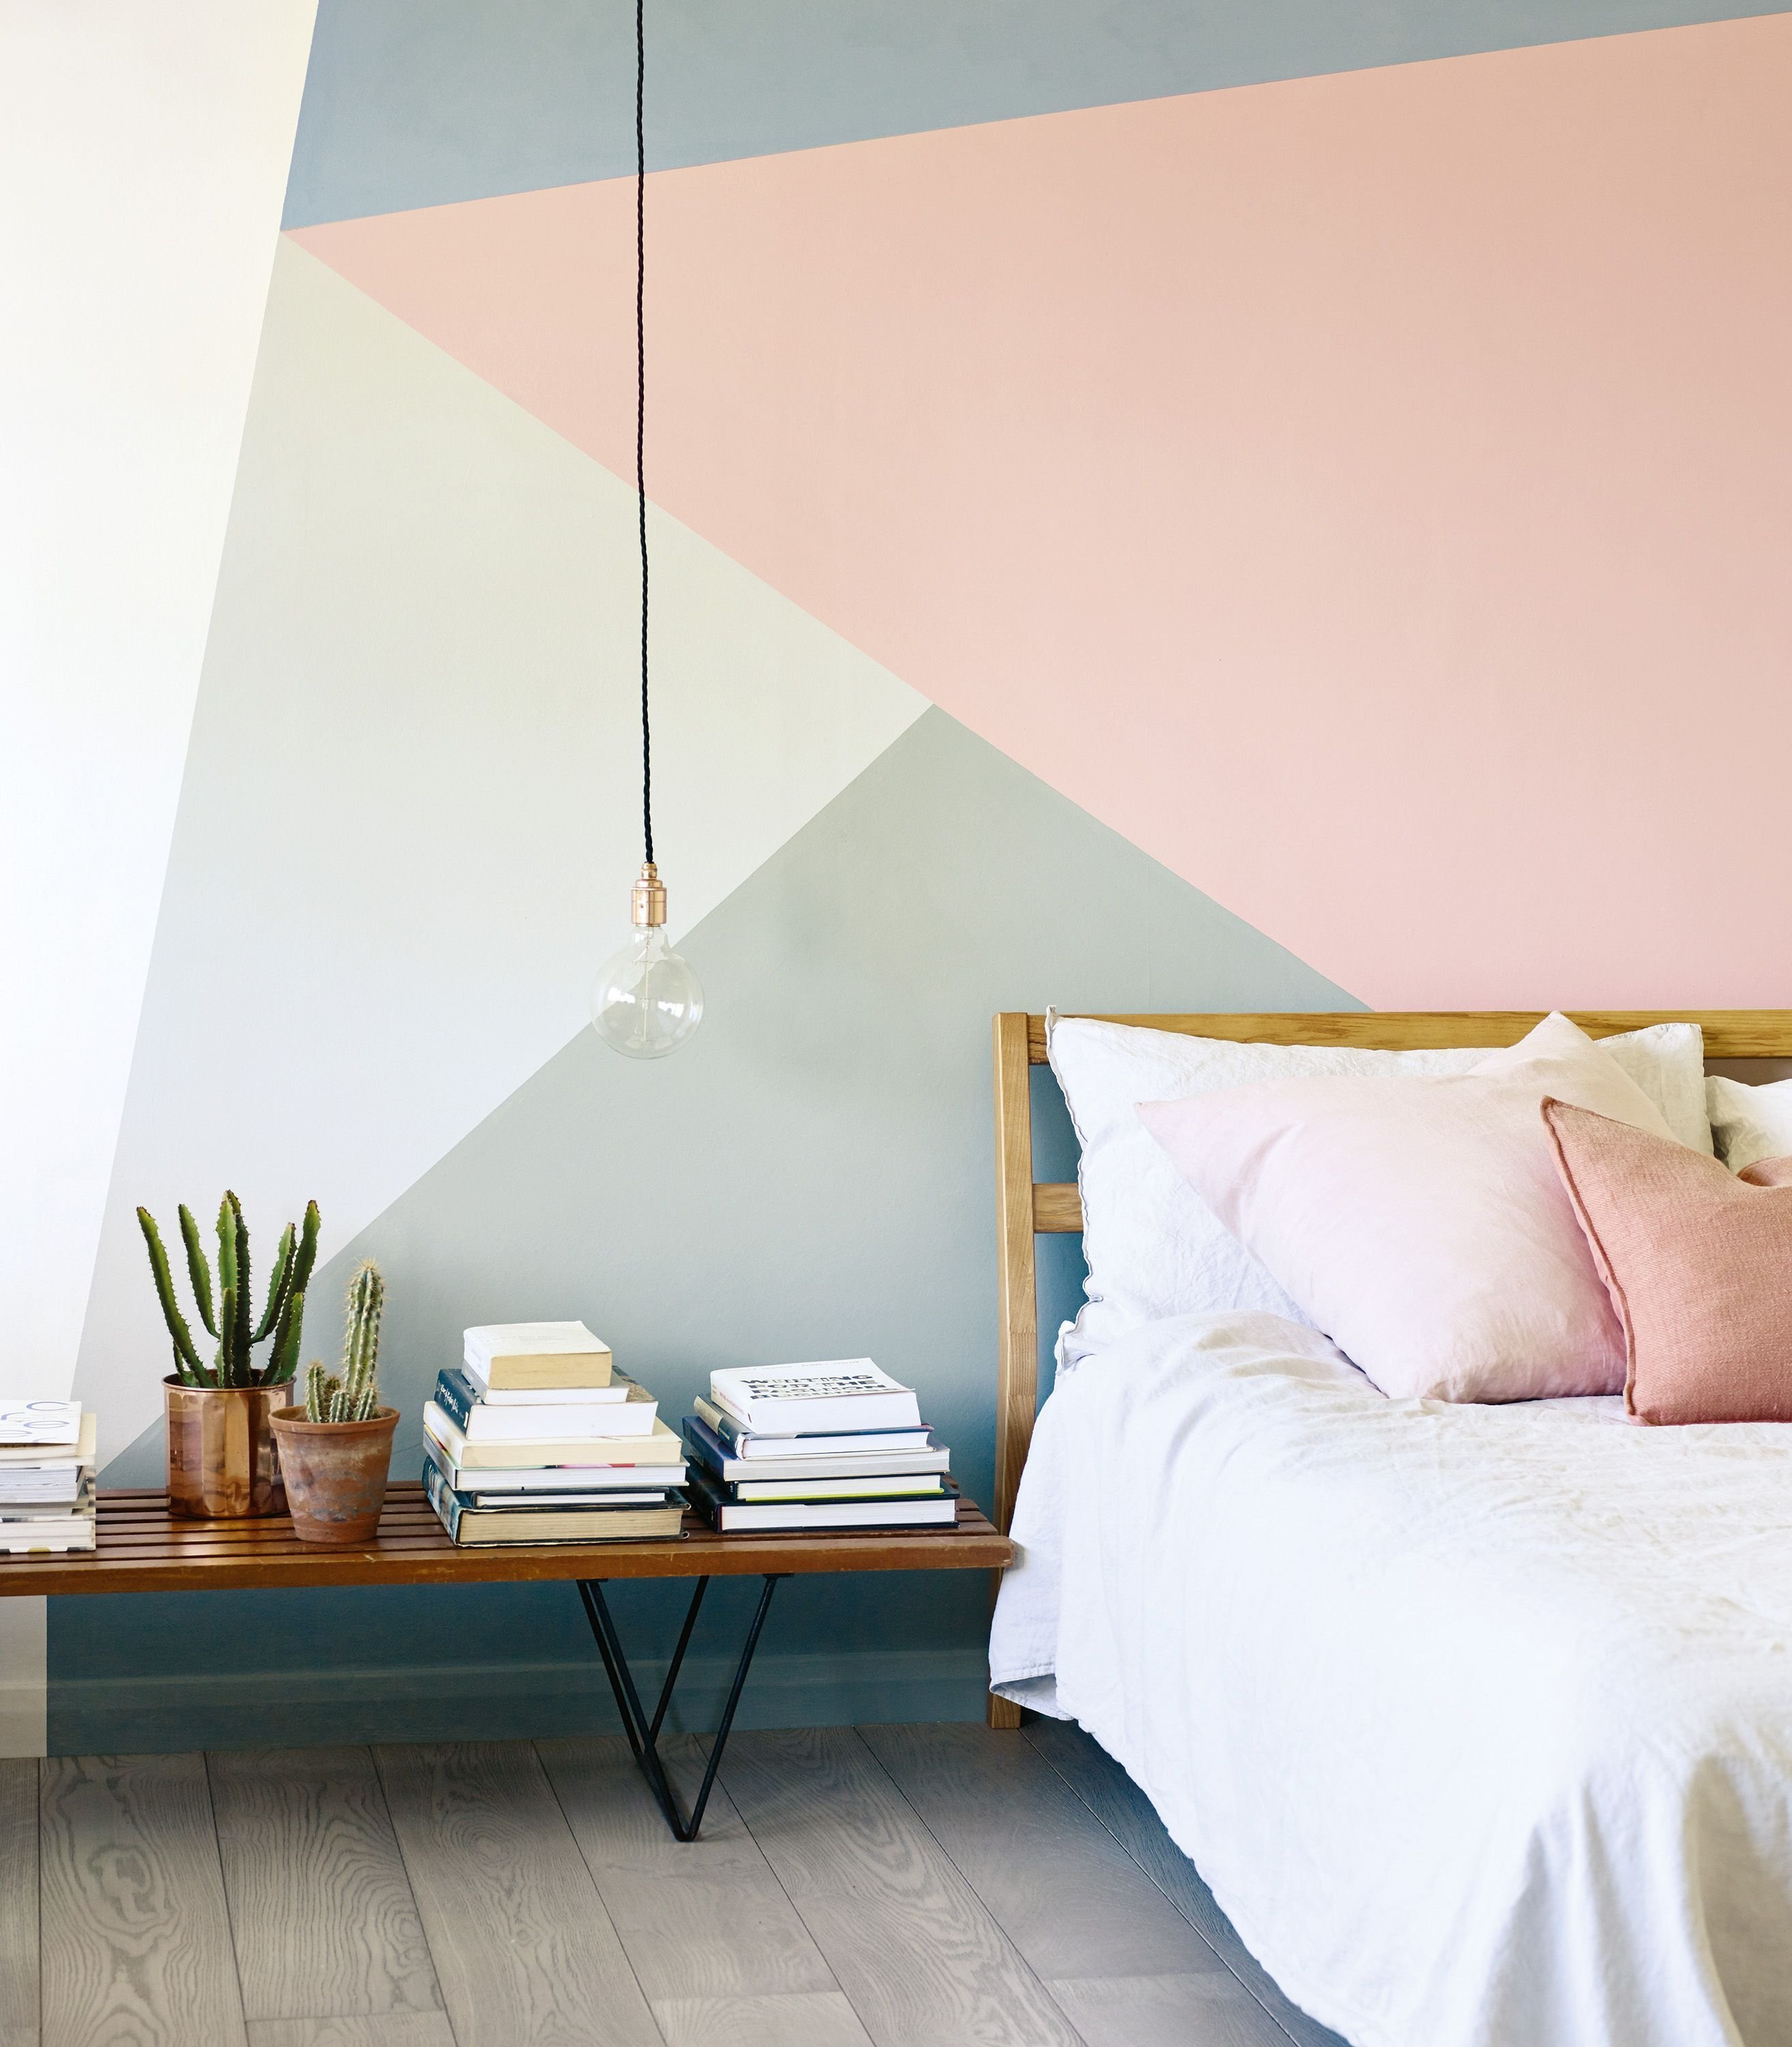 покраска стен в квартире дизайн способы оформления стен